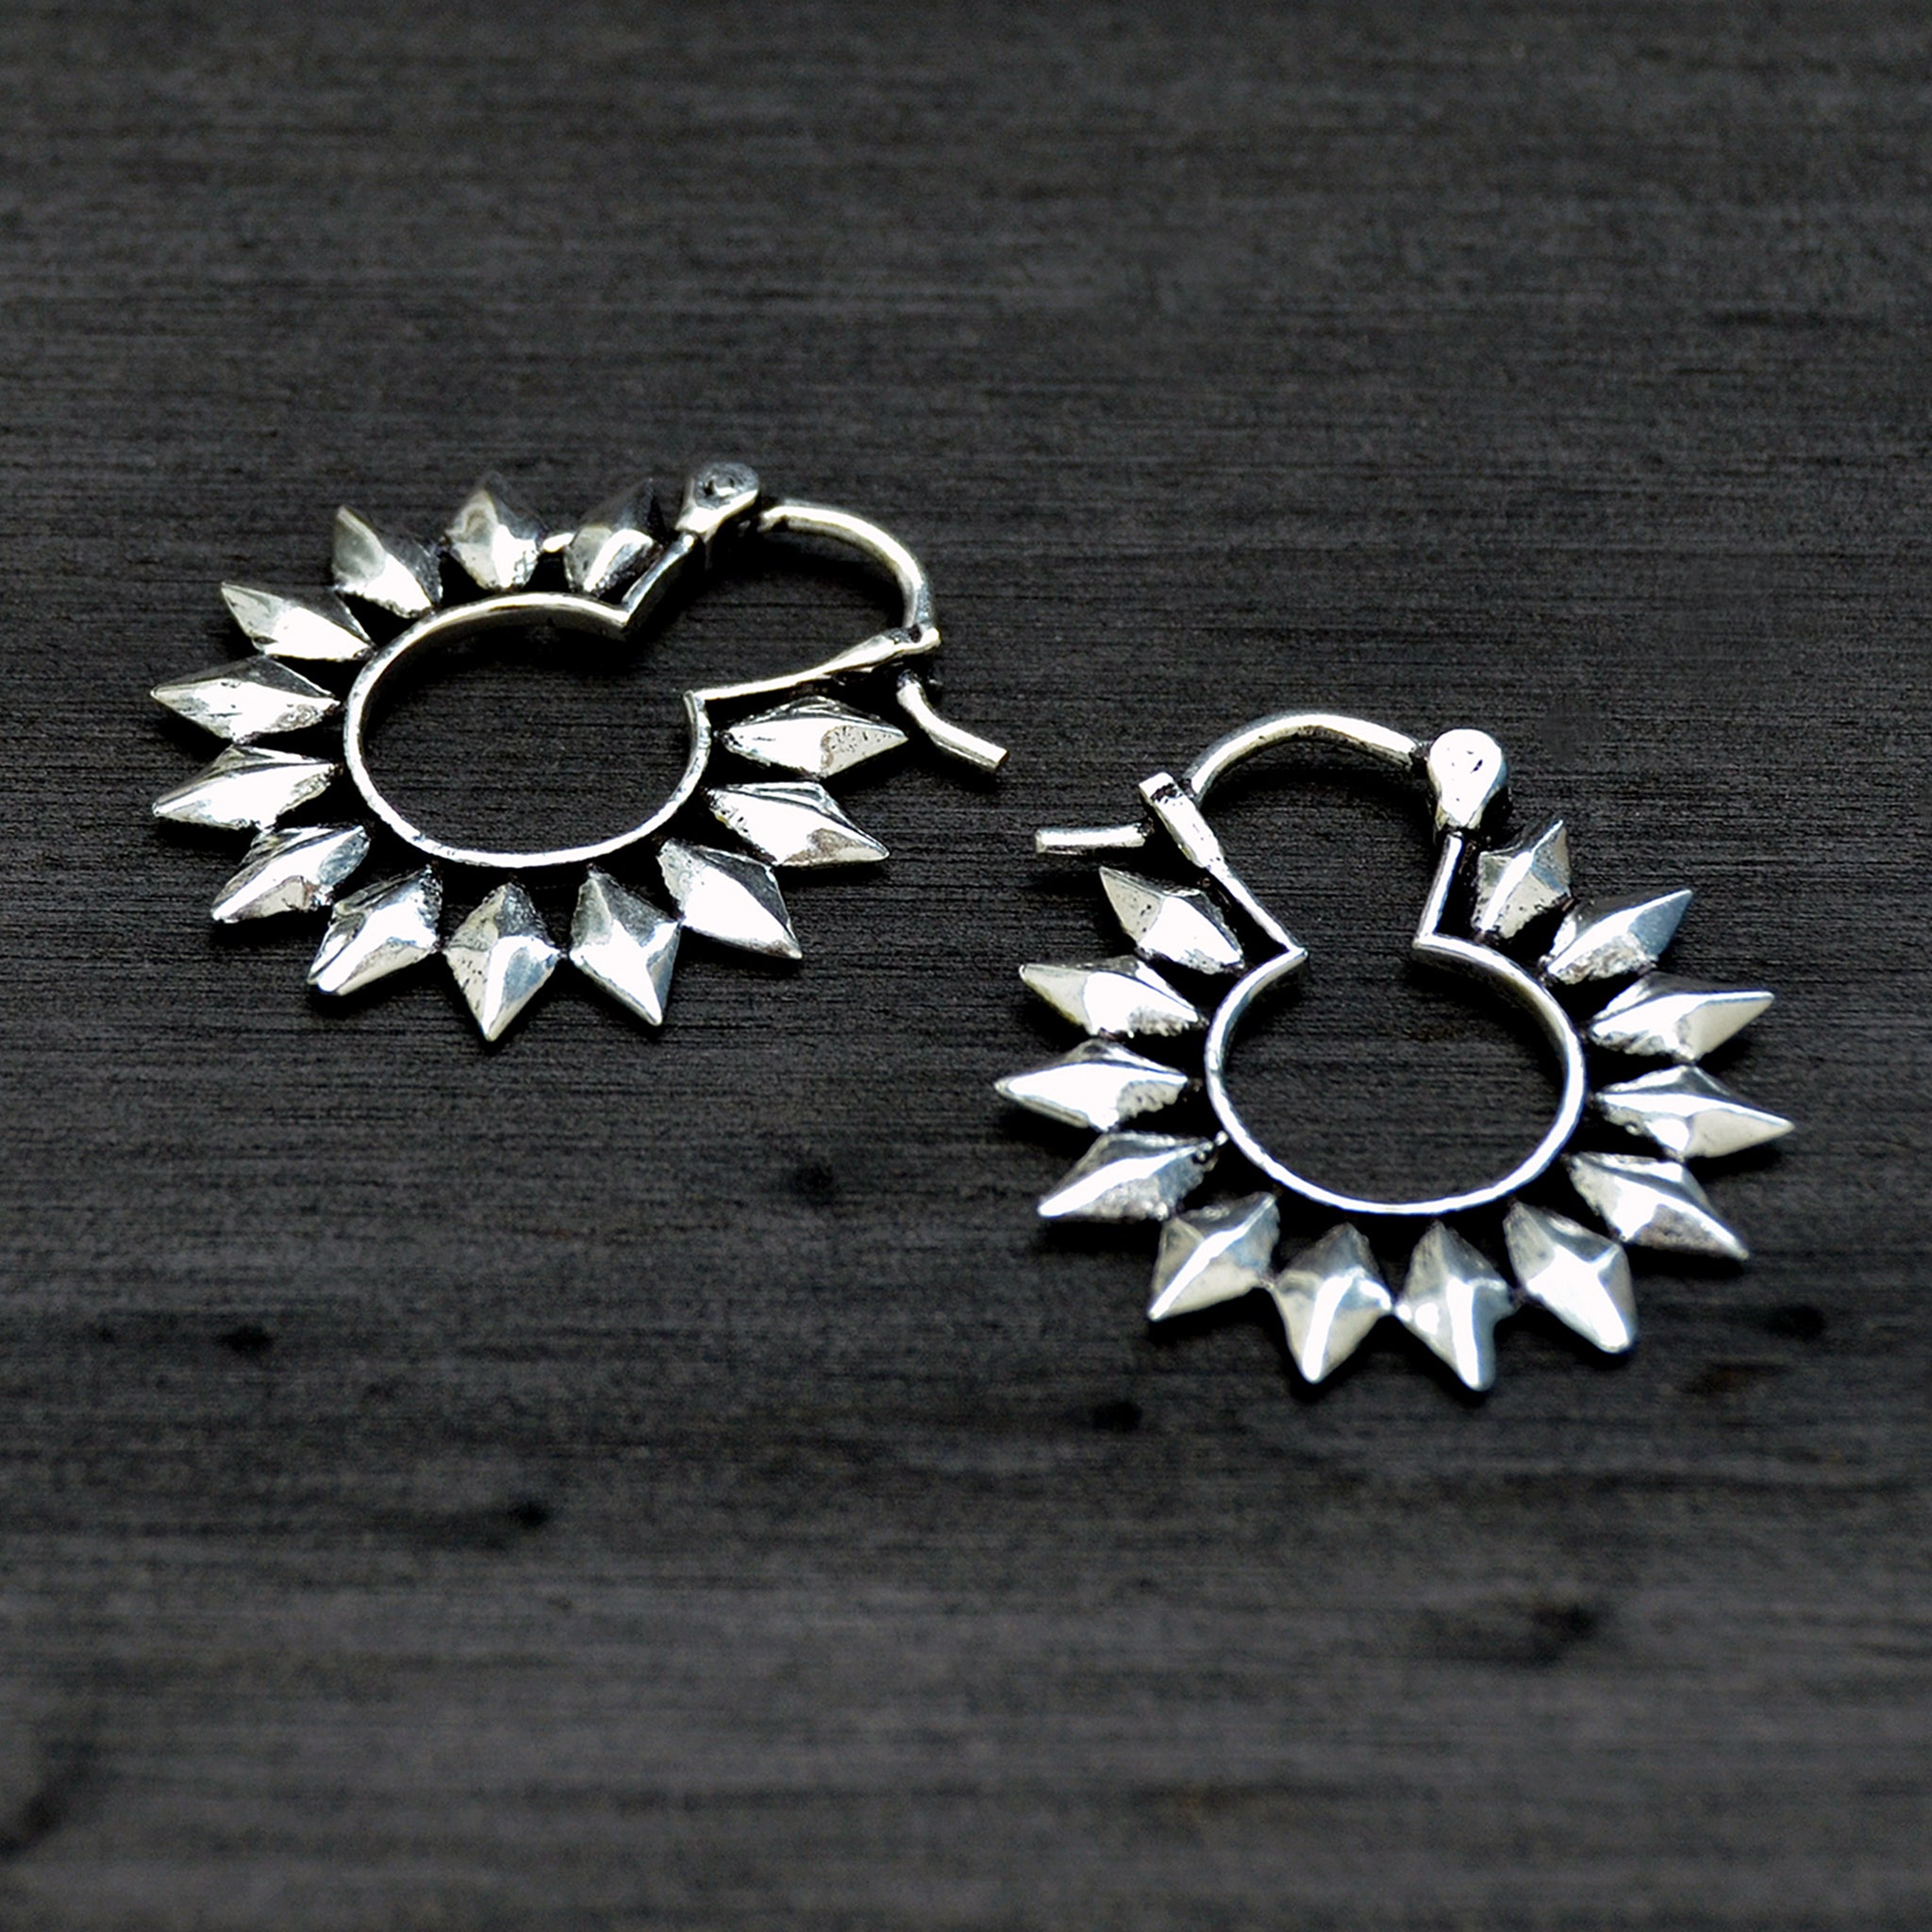 Small silver hoop earrings on black background